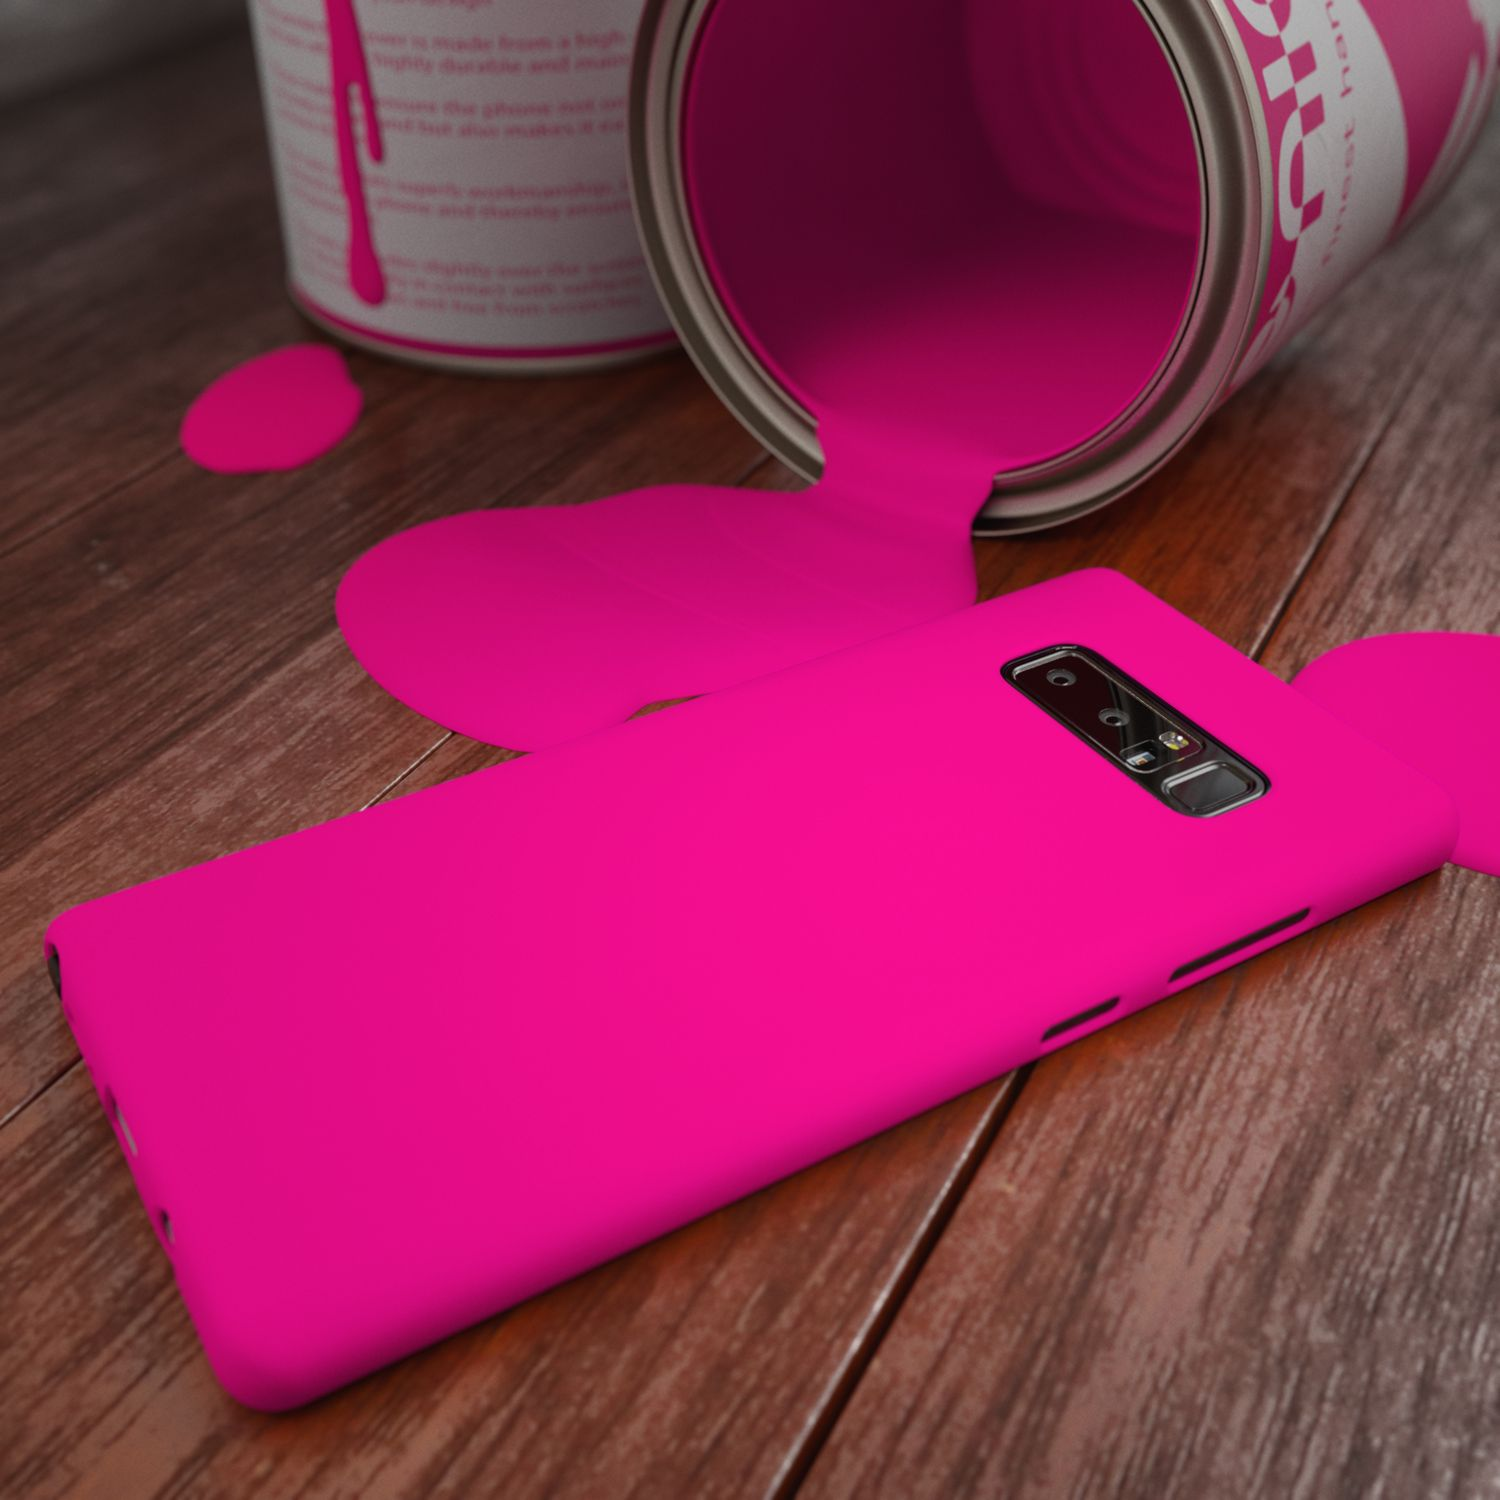 Note 8, NALIA Neon Samsung, Galaxy Backcover, Pink Silikon Hülle,